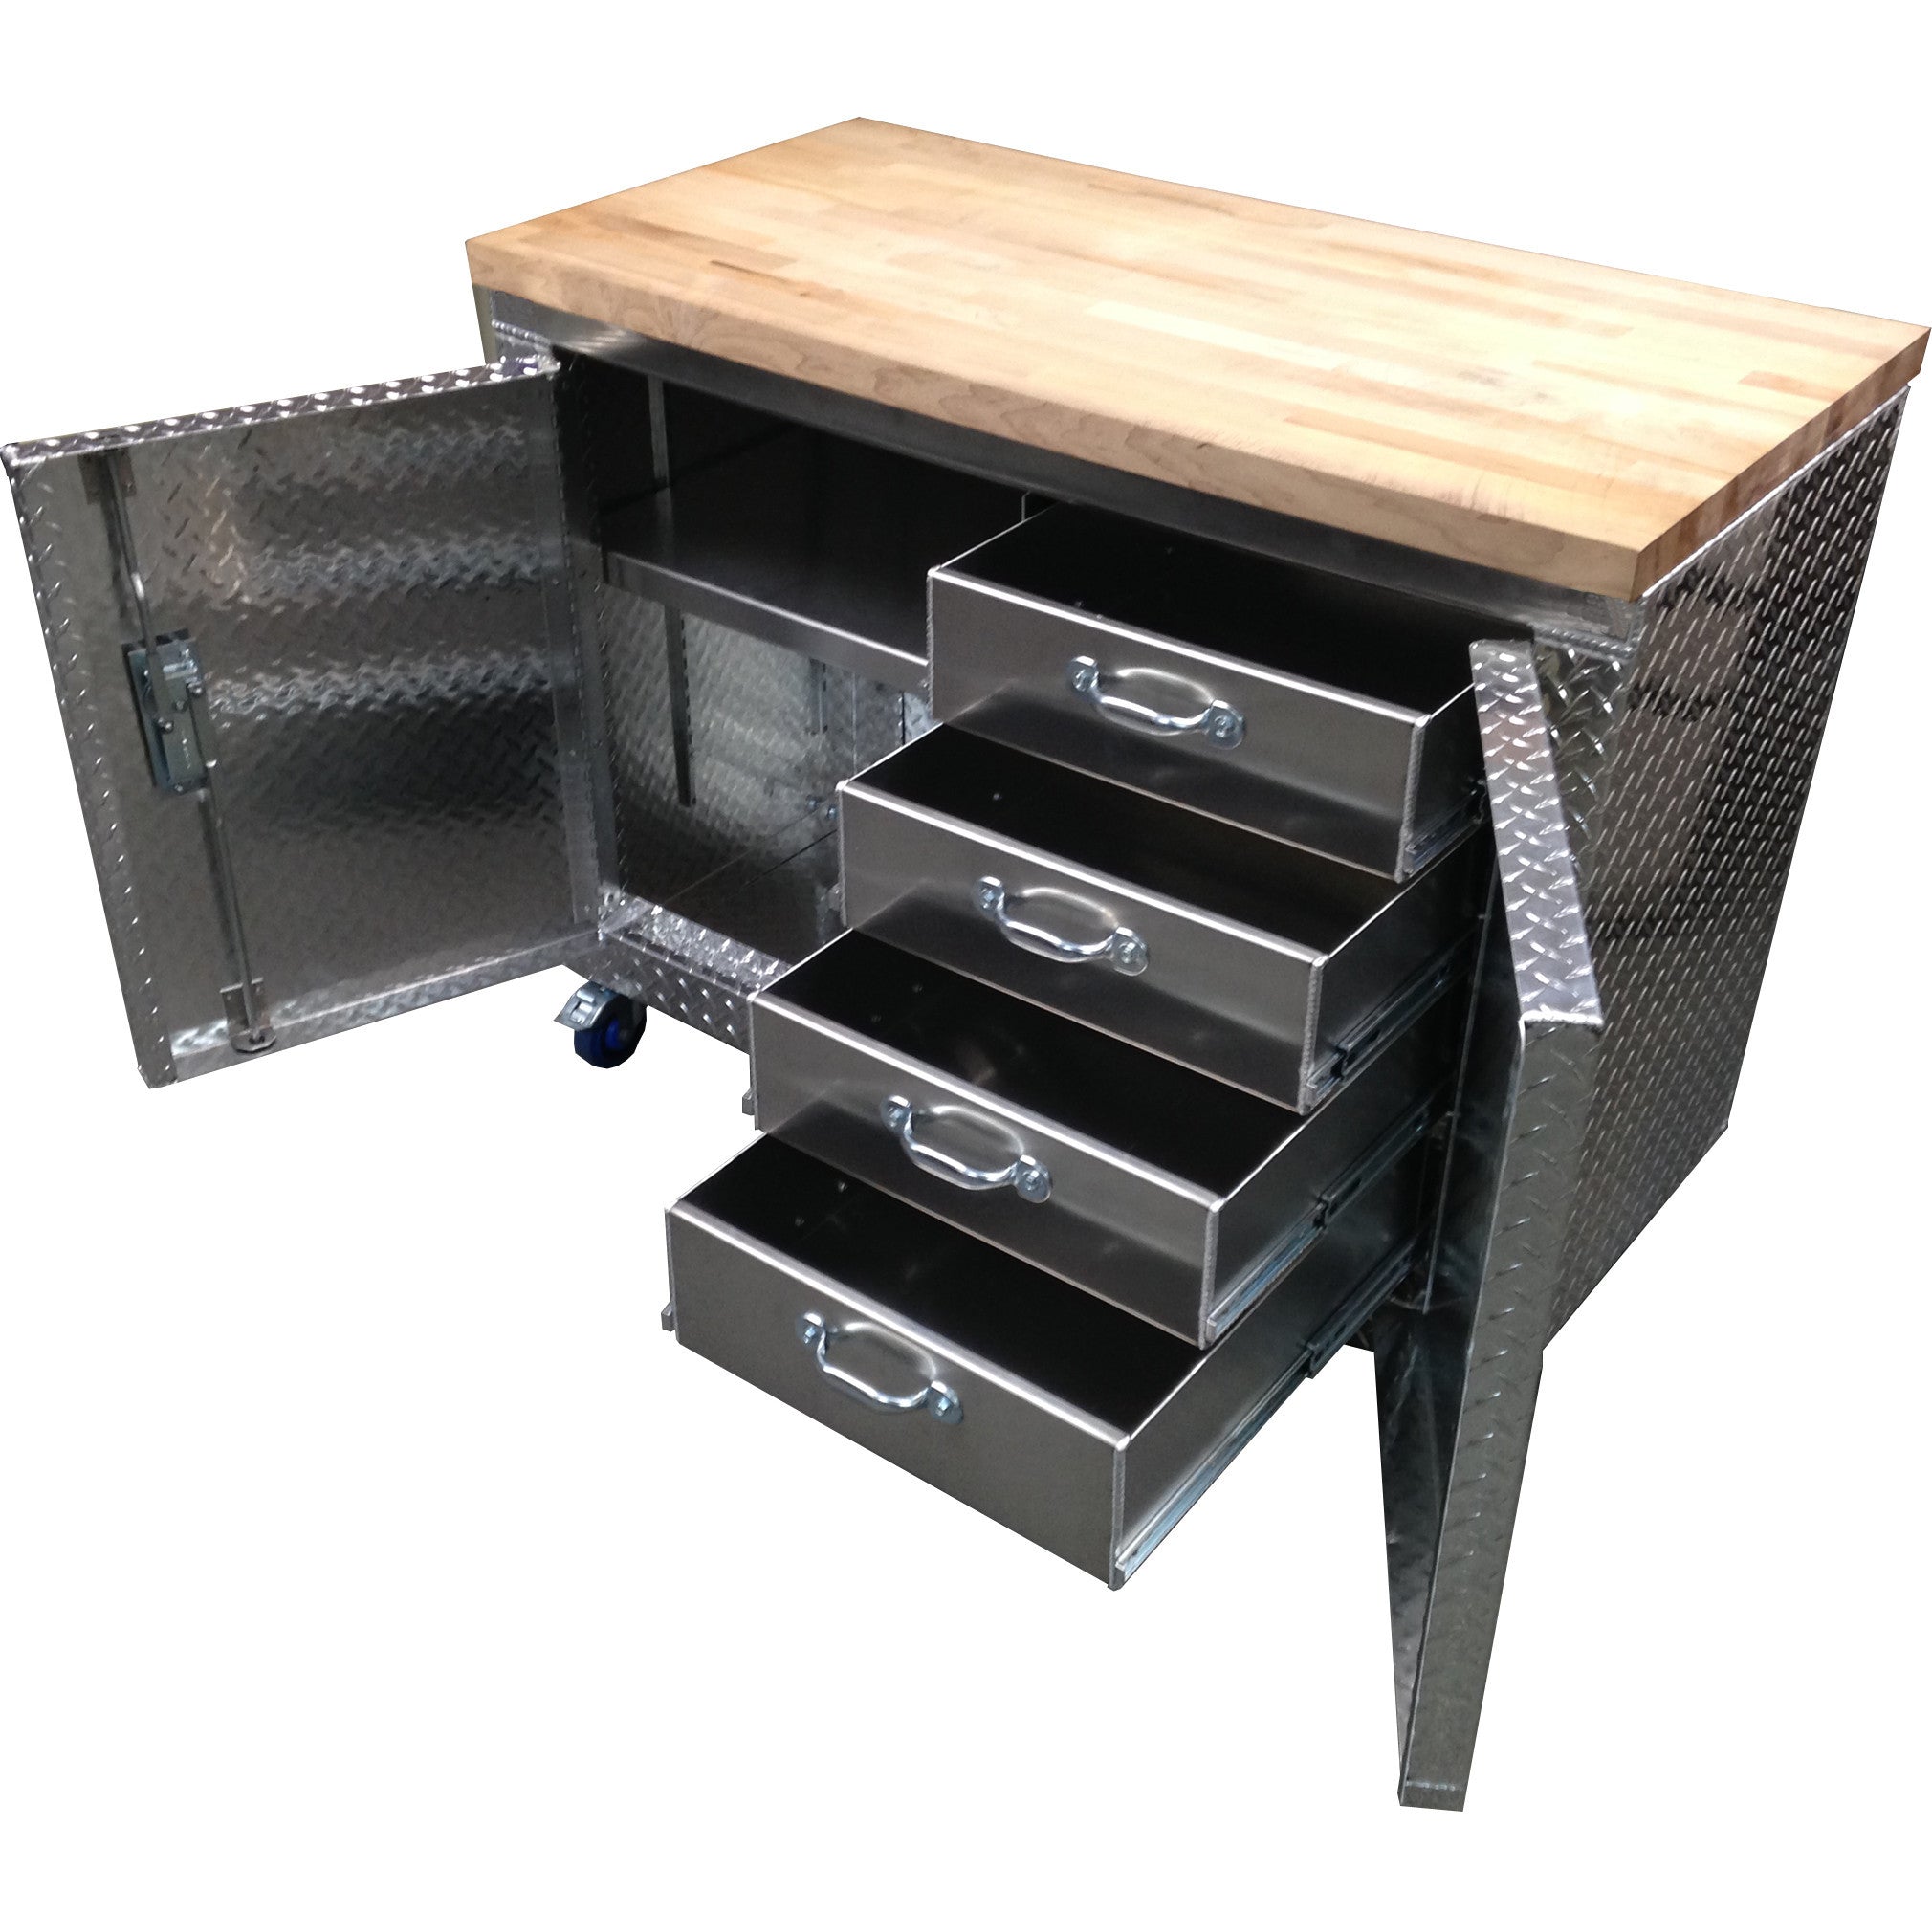 Base Cabinet with Roll Trays - Organization - Diamond